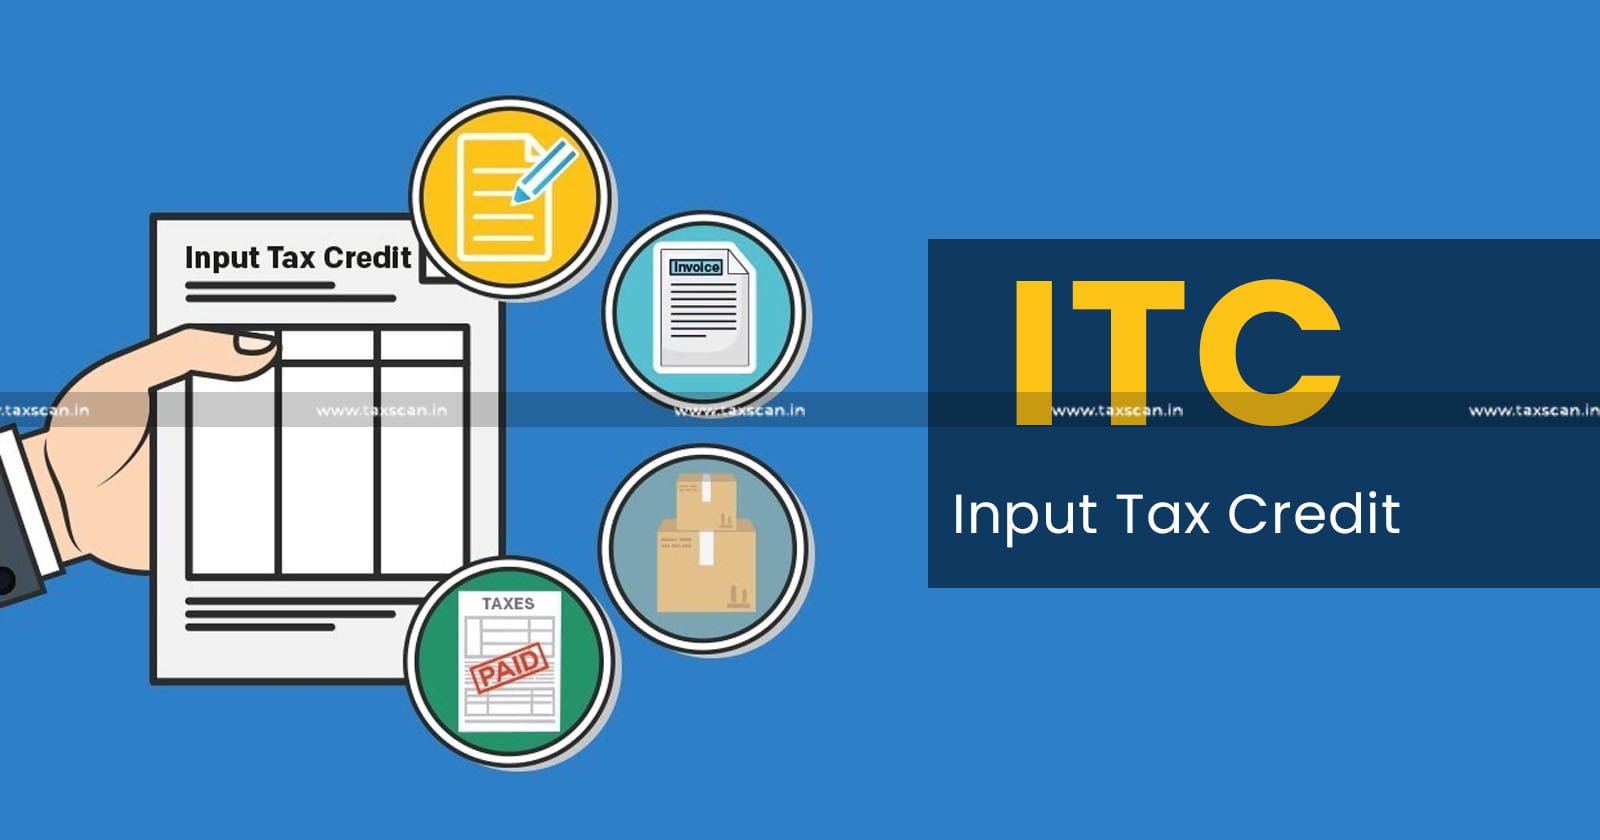 Karnataka VAT - Karnataka Value Added Tax - Supreme Court restores Order - Commercial Tax Tribunal - Commercial Tax Tribunal allowing ITC - TAXSCAN